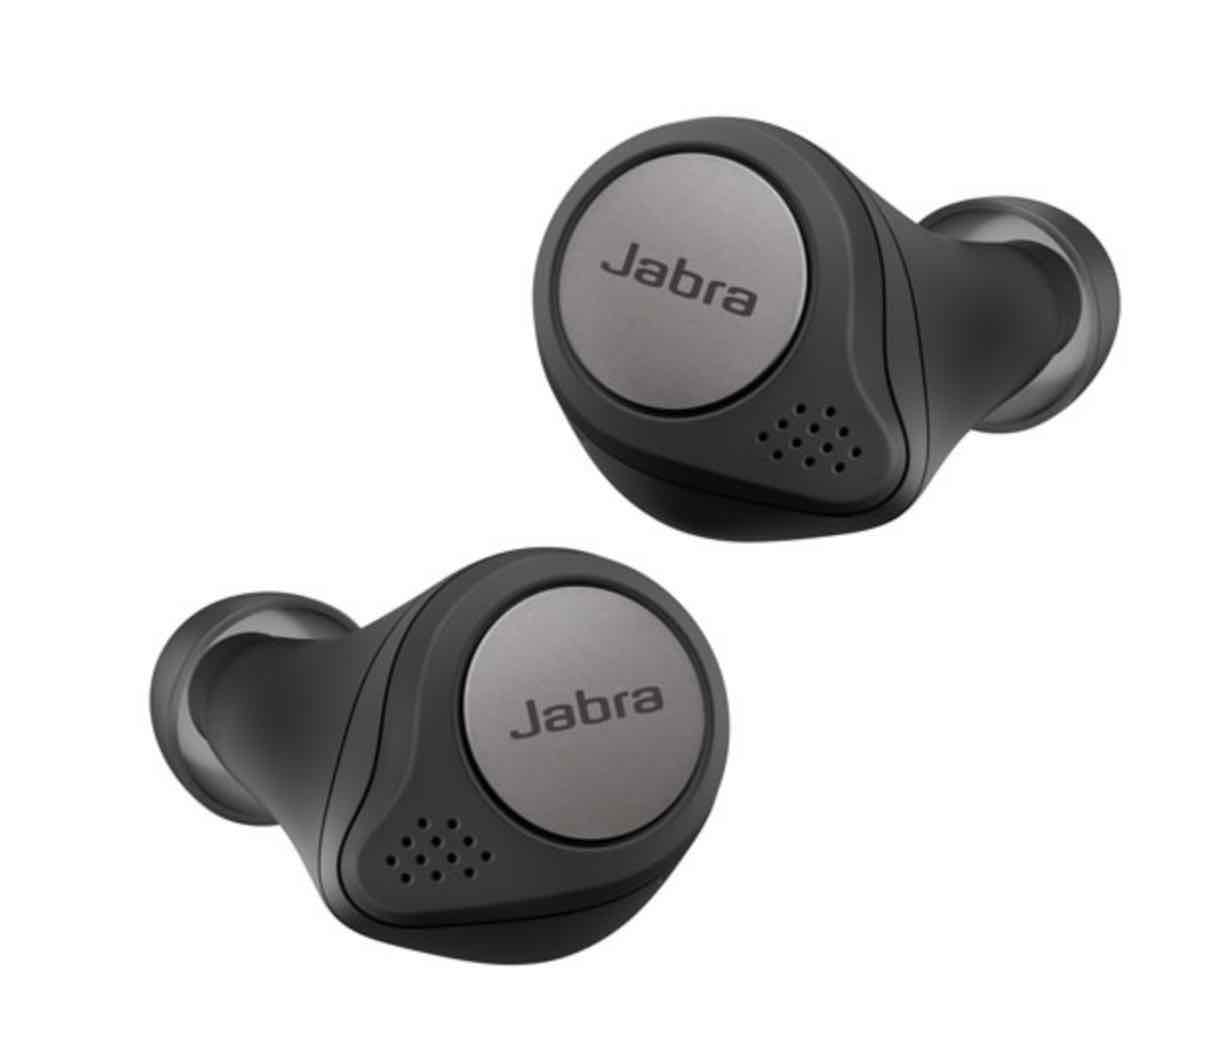 Jabra headphones for workout